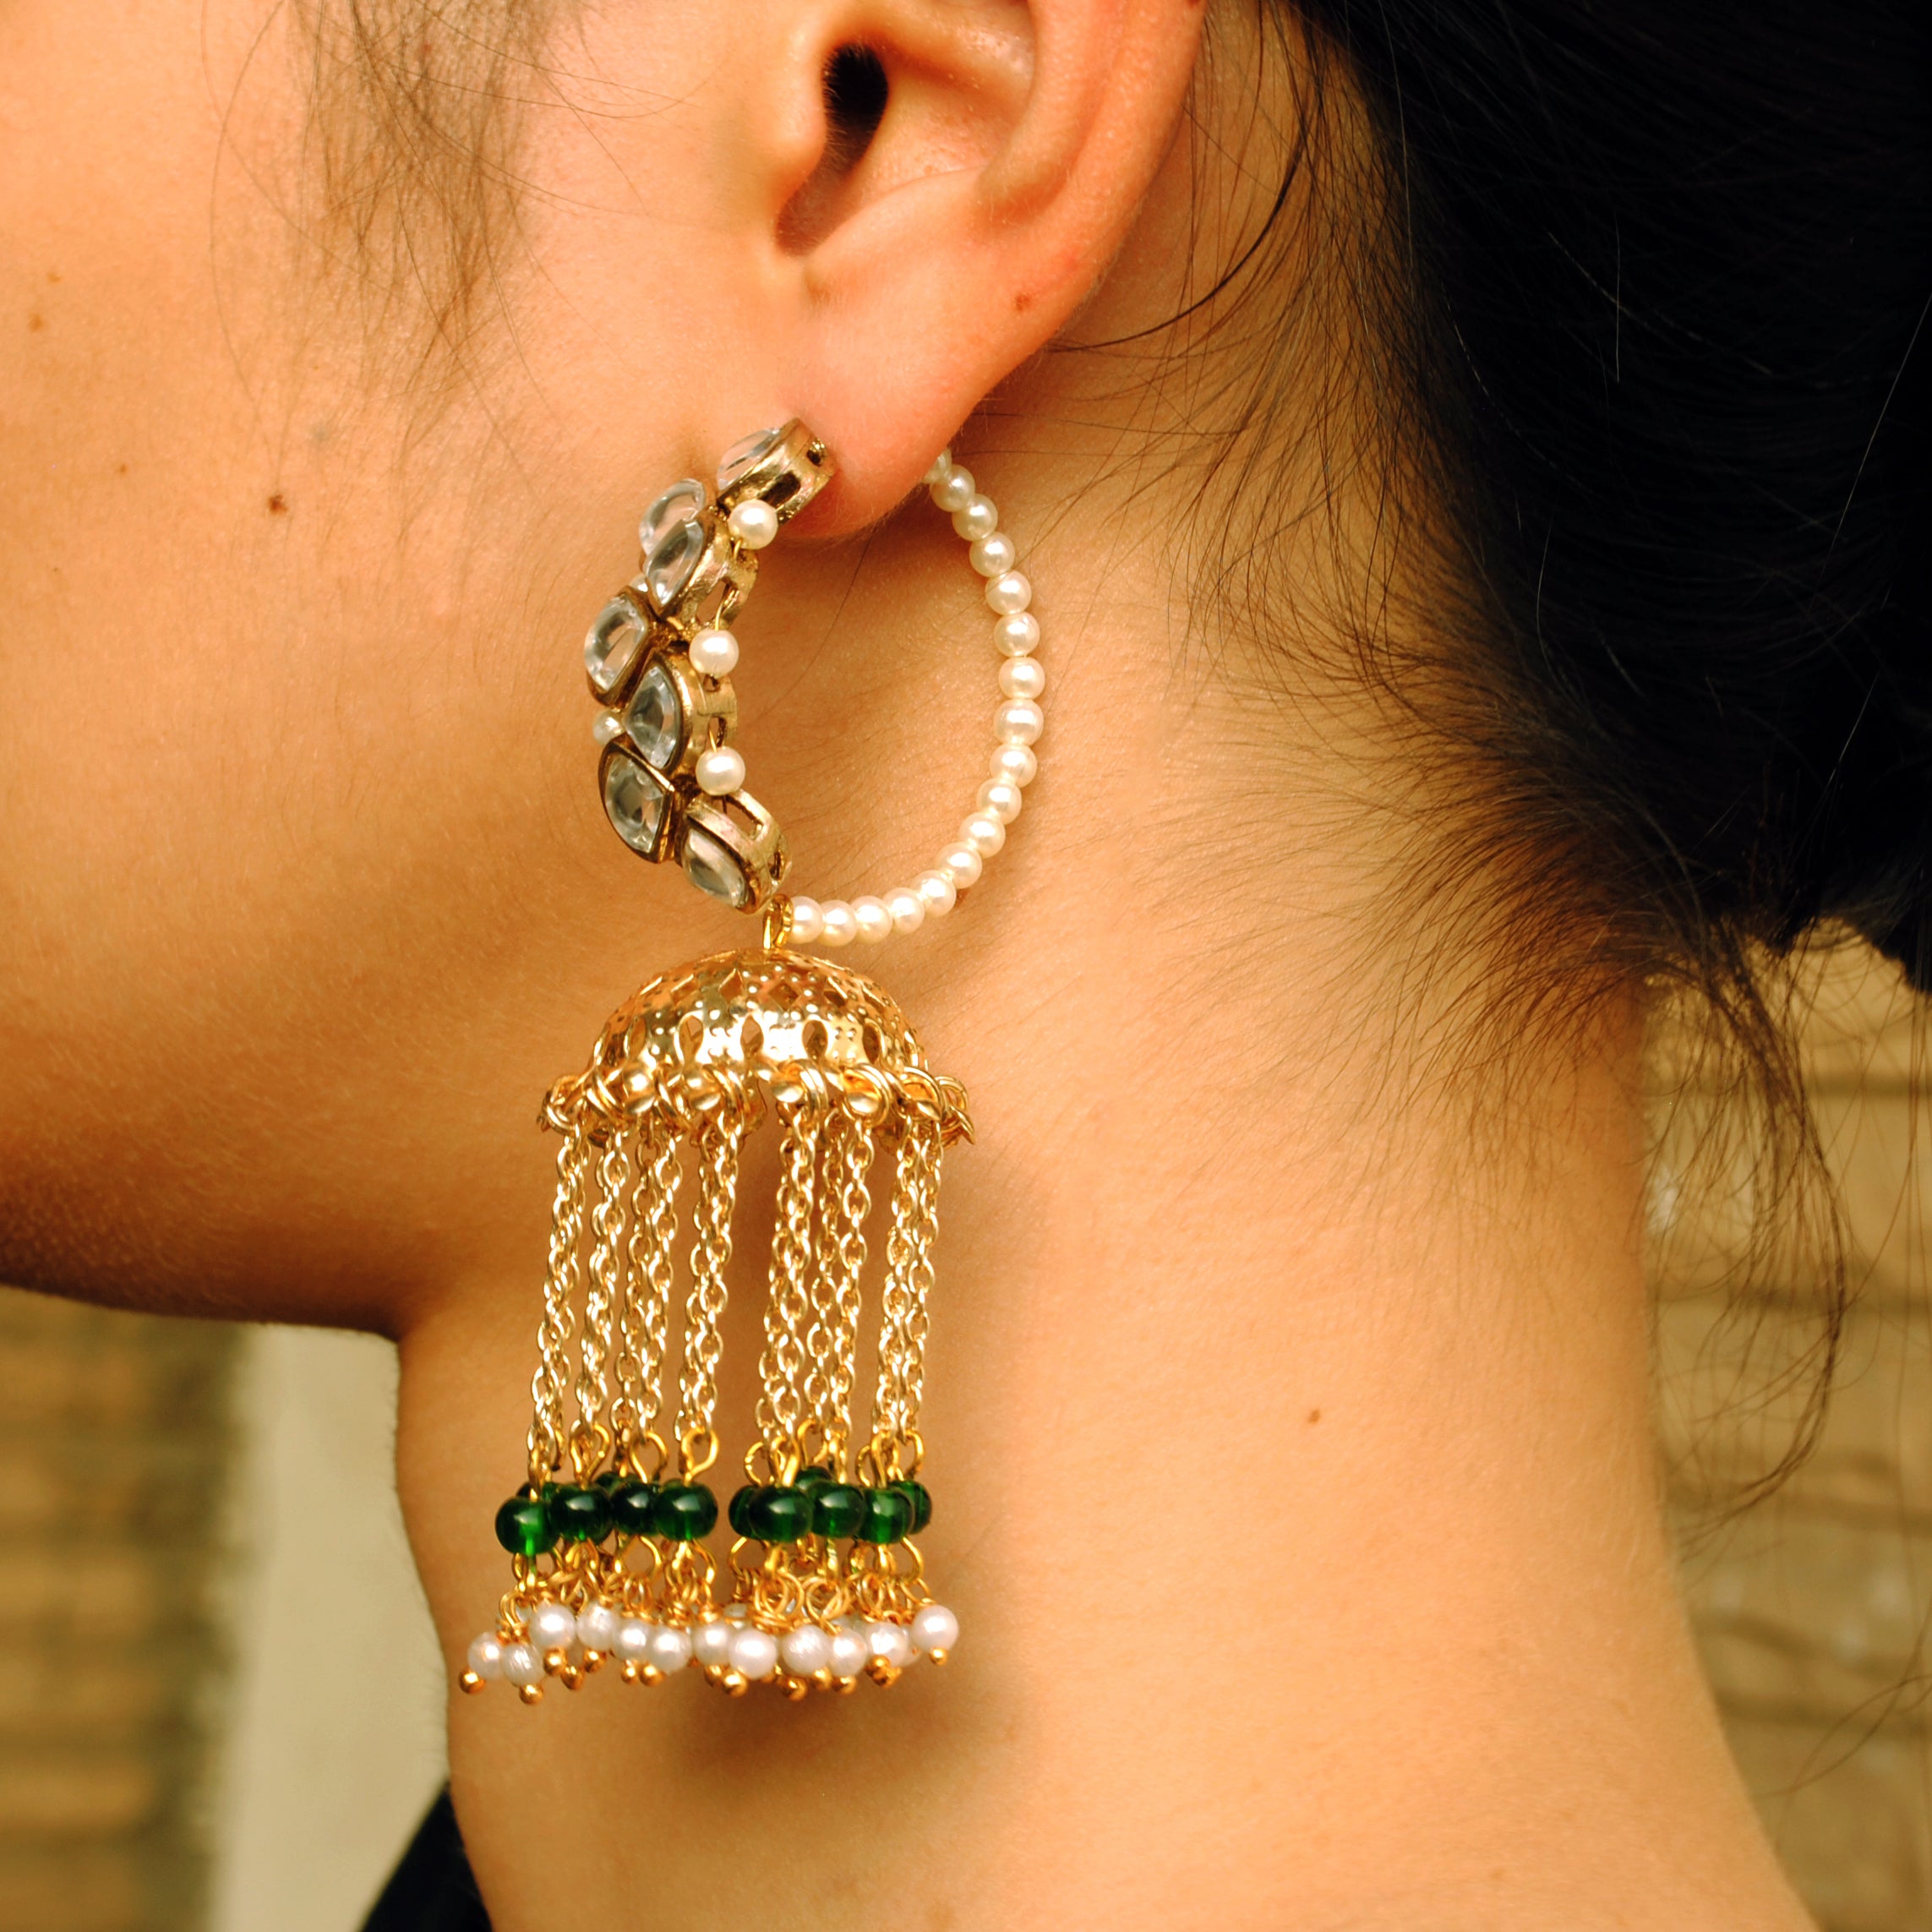    	 BeAbhika Handmade Artificial Jewelry Green Color Kundan Jhumki Hoop Earrings Gold Tone Handmade Earrings Traditional Kundan Heavy Earrings Hoops Green Hoop Big Jhumka Style Dangling Ethnic Dress Matching Earrings Gift For Women Available On COD In India Heeramandi Style Jewelry